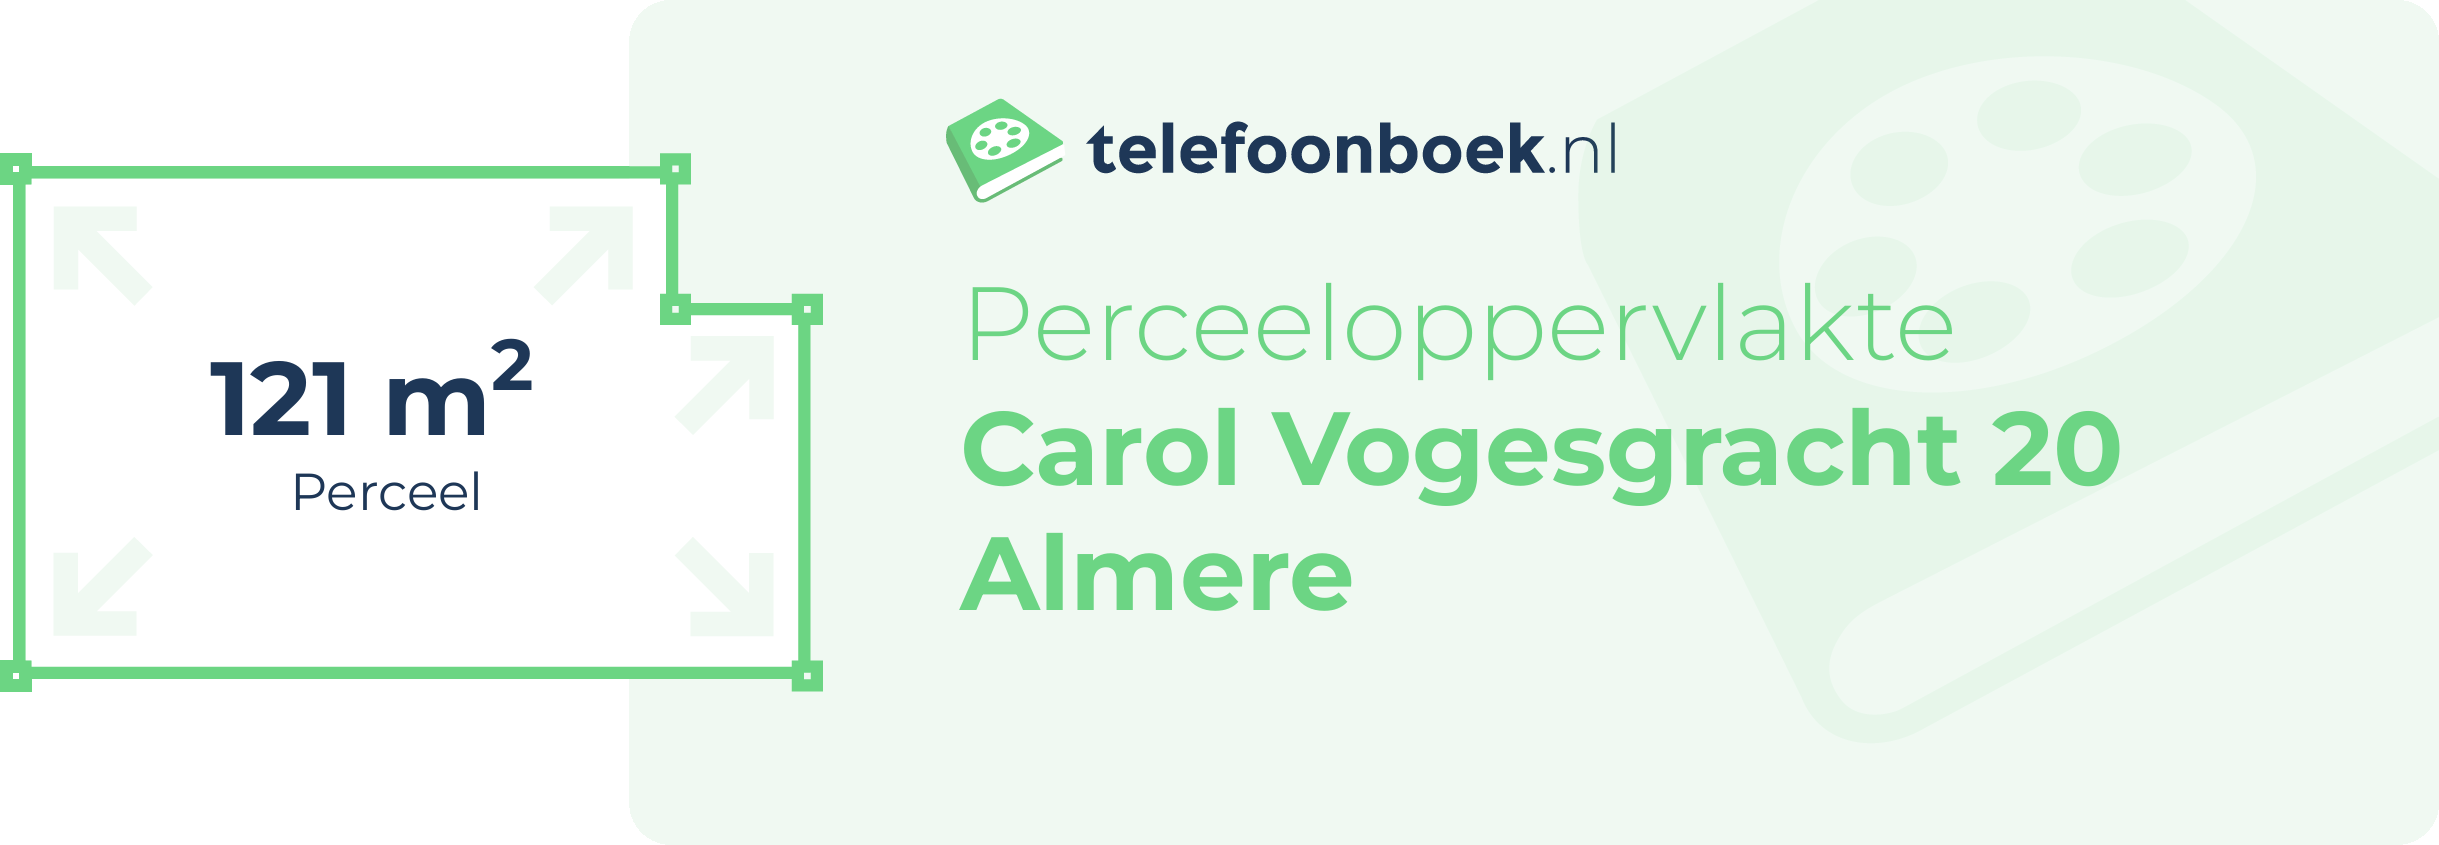 Perceeloppervlakte Carol Vogesgracht 20 Almere